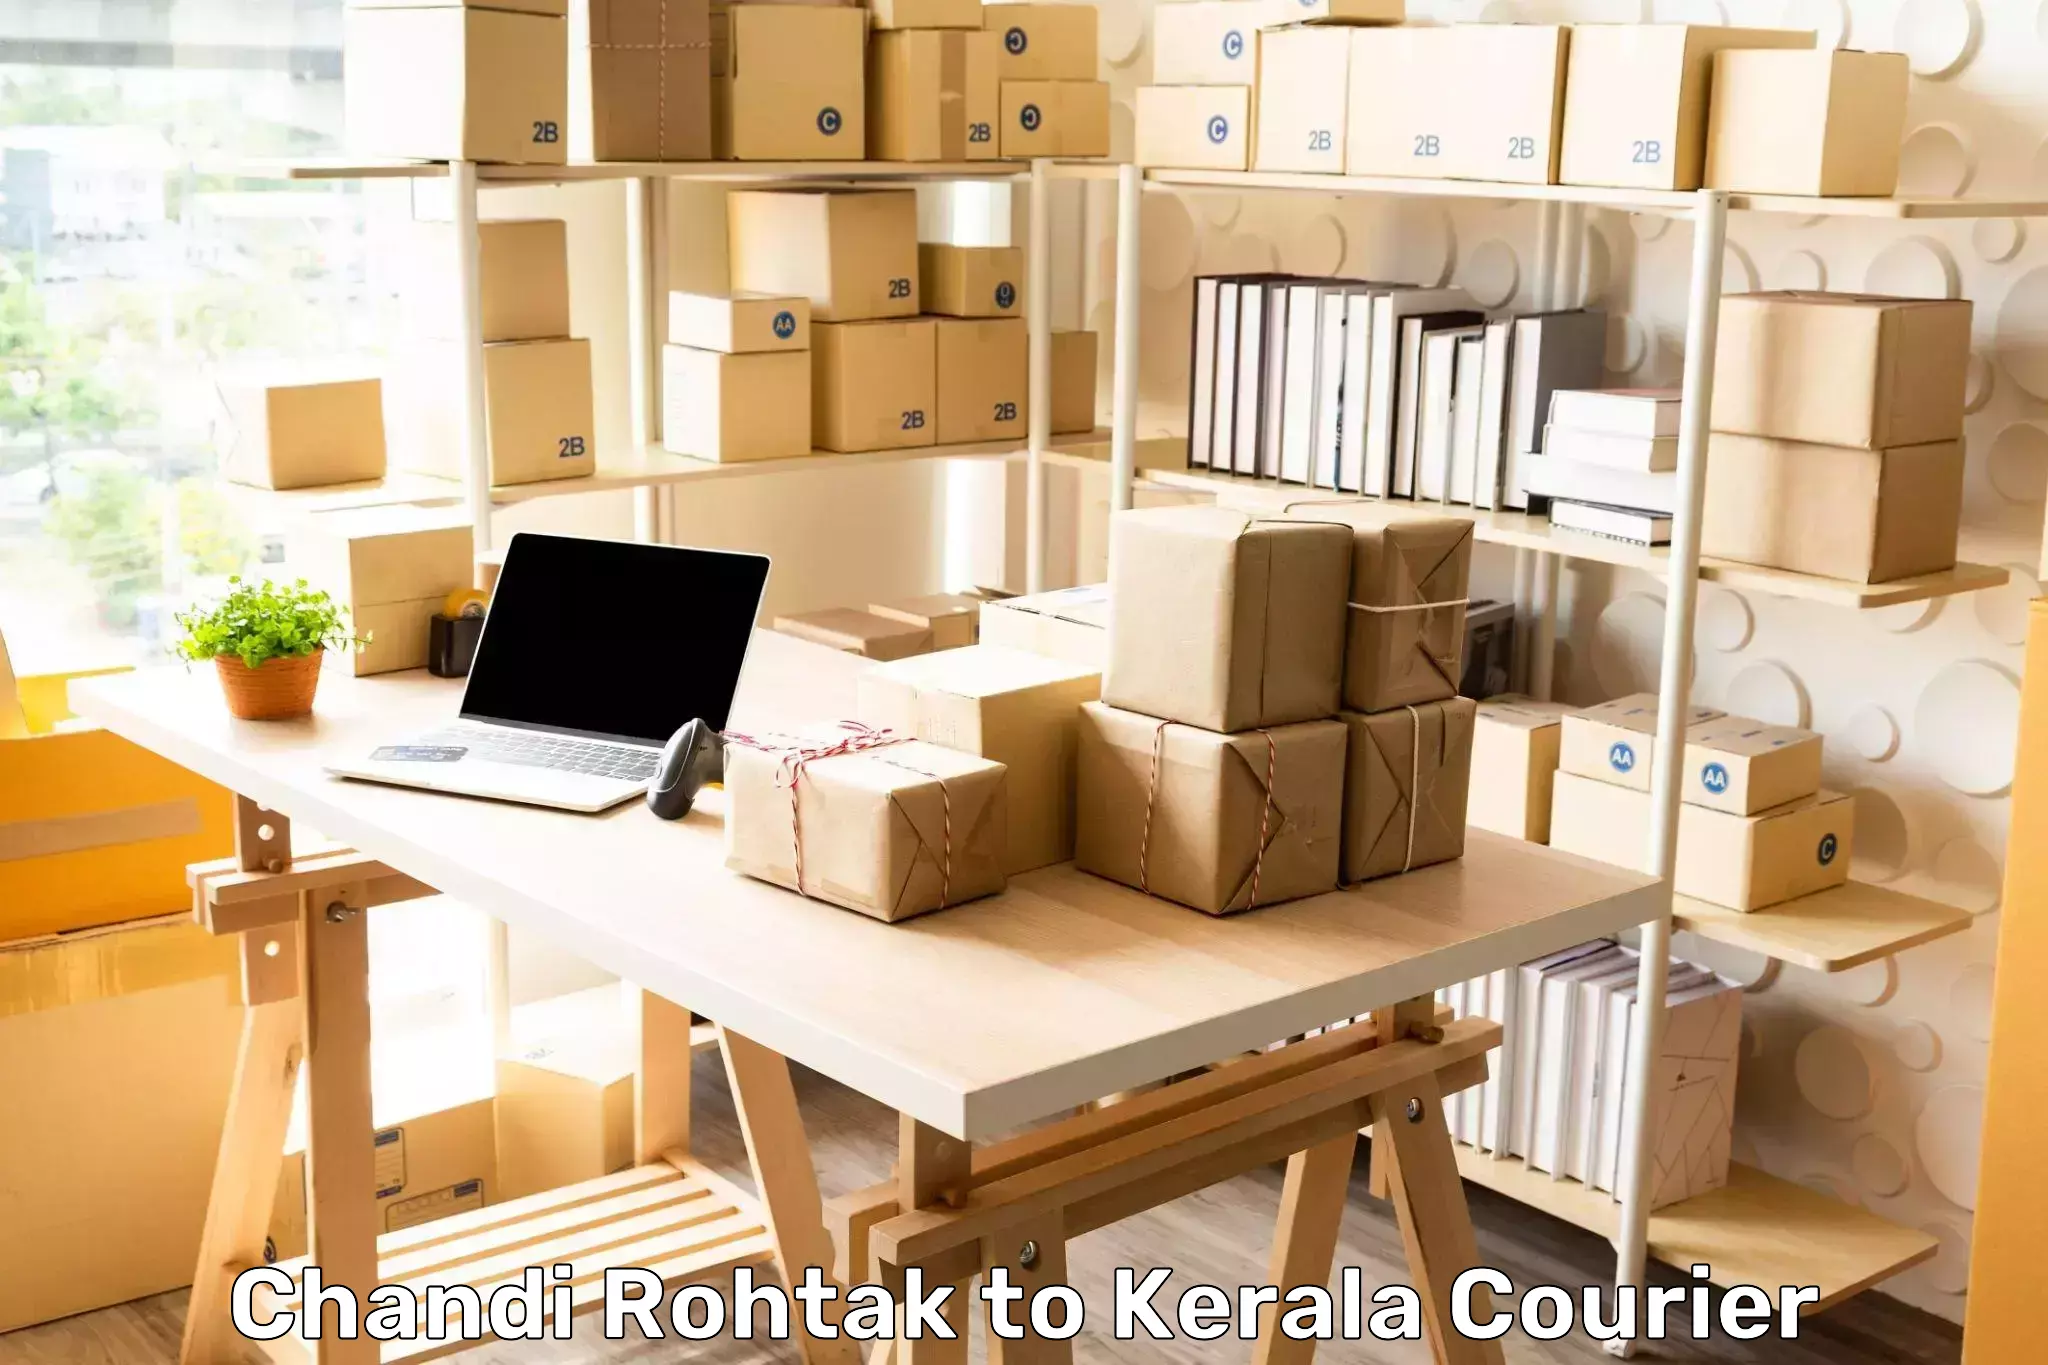 Quick dispatch service Chandi Rohtak to Cochin Port Kochi